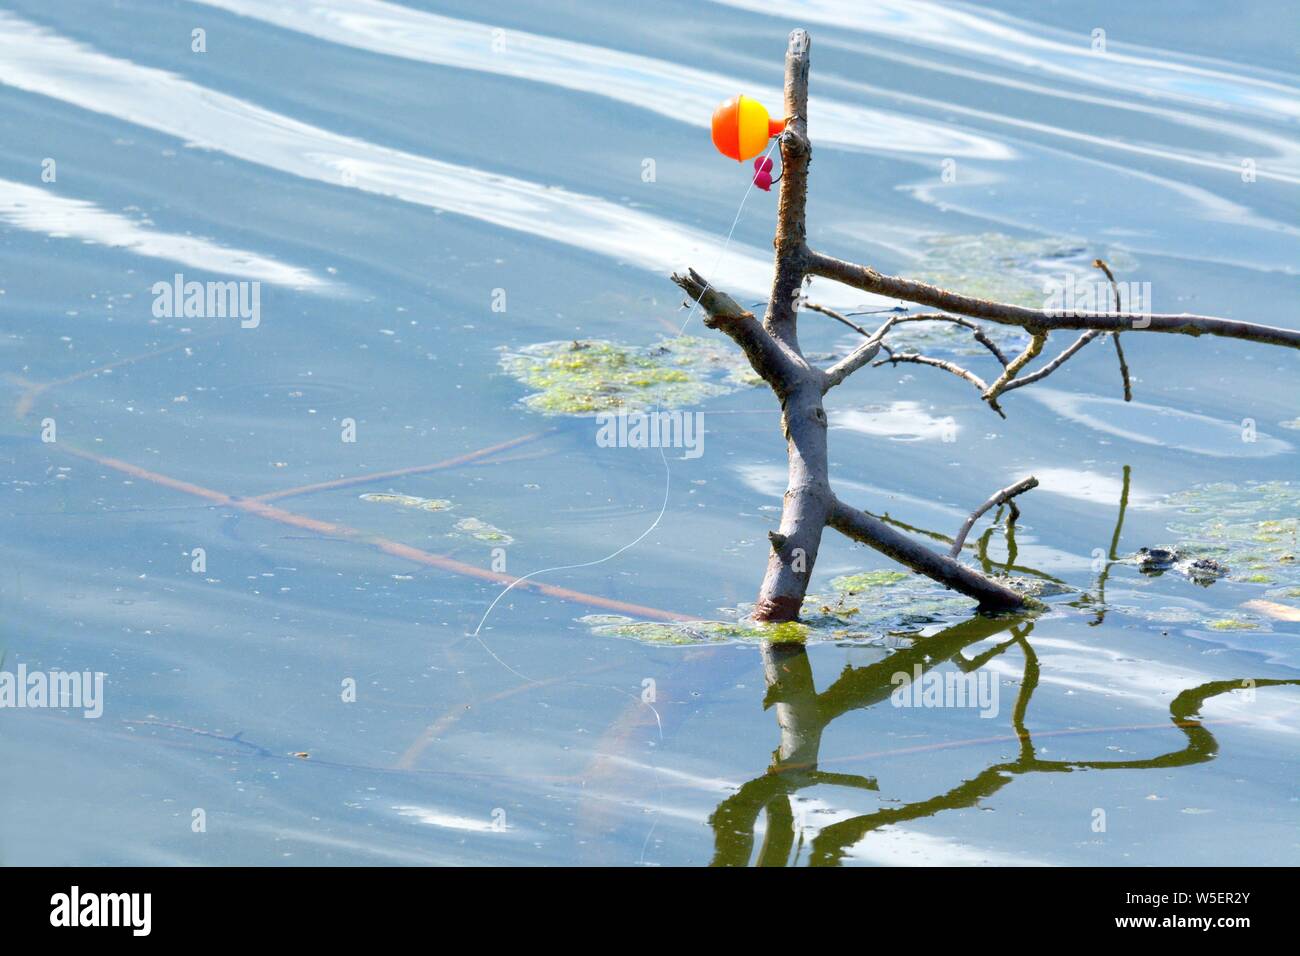 Fishing line and fishing bobber float left strung around tree branch in lake endangering wild waterfowl Stock Photo